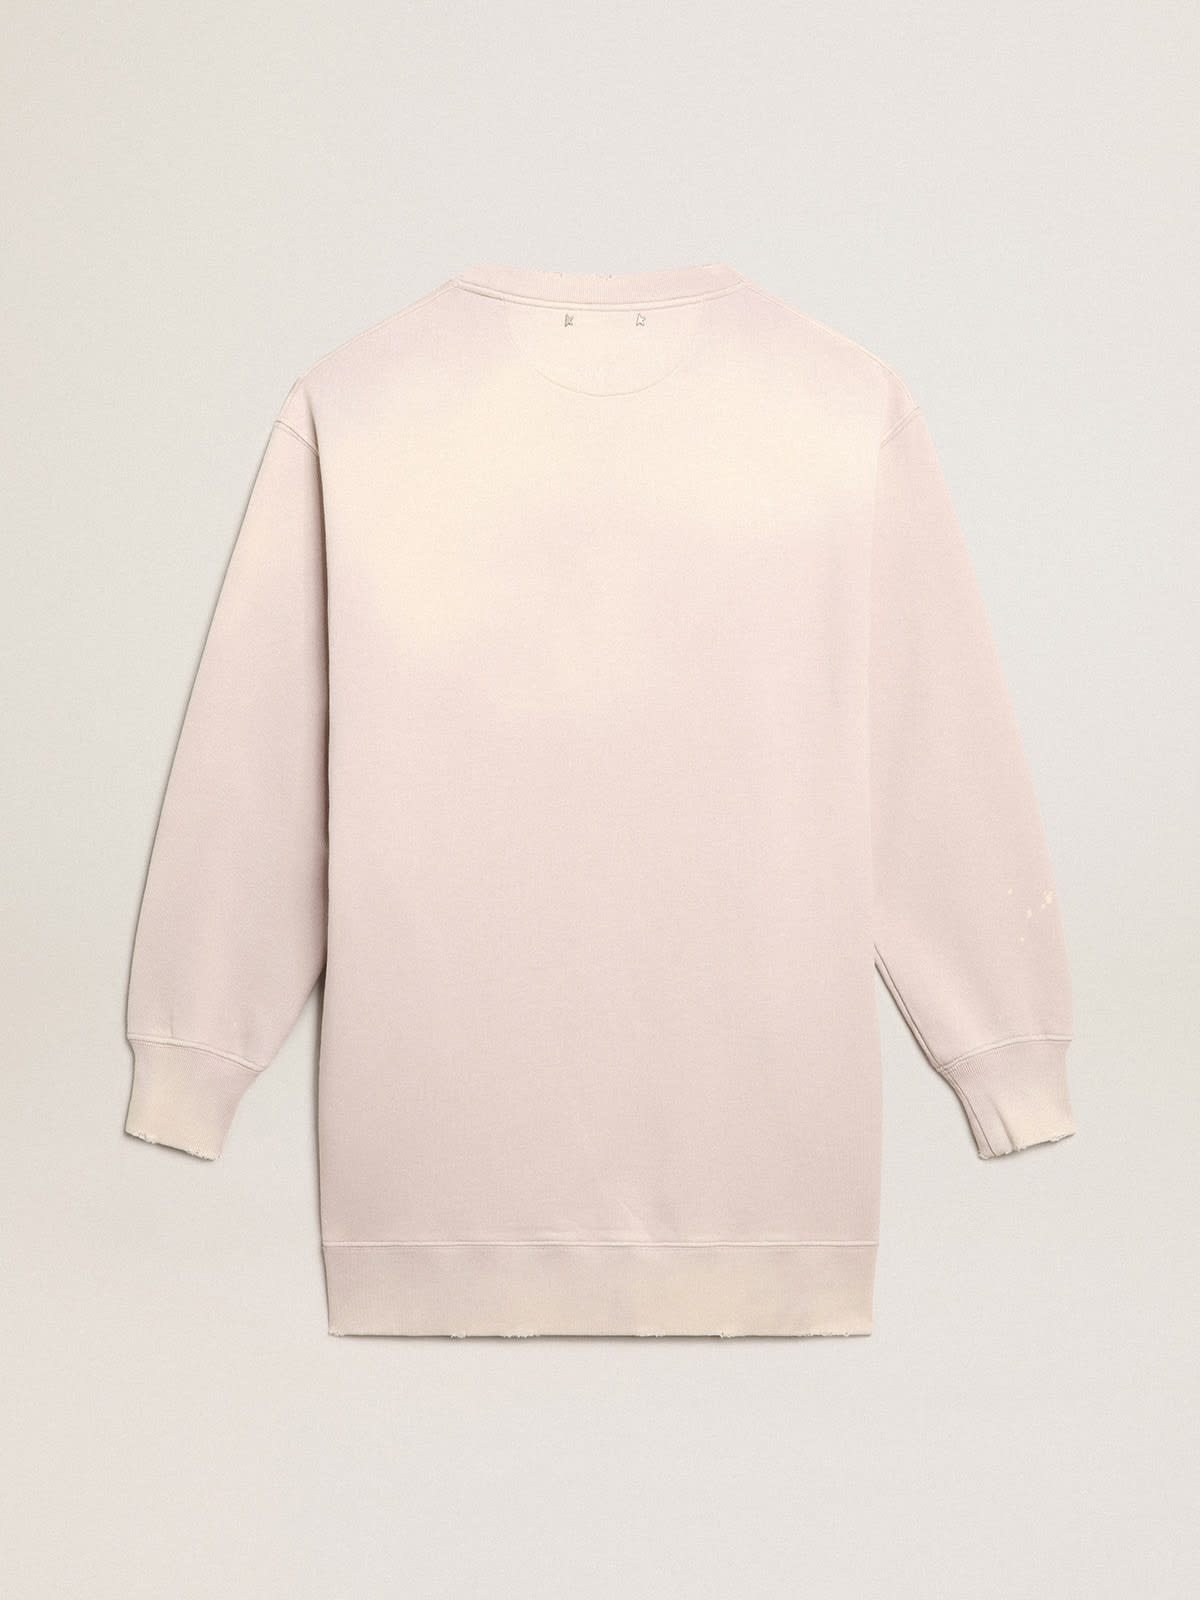 Distressed-finish pale pink sweatshirt dress - 6